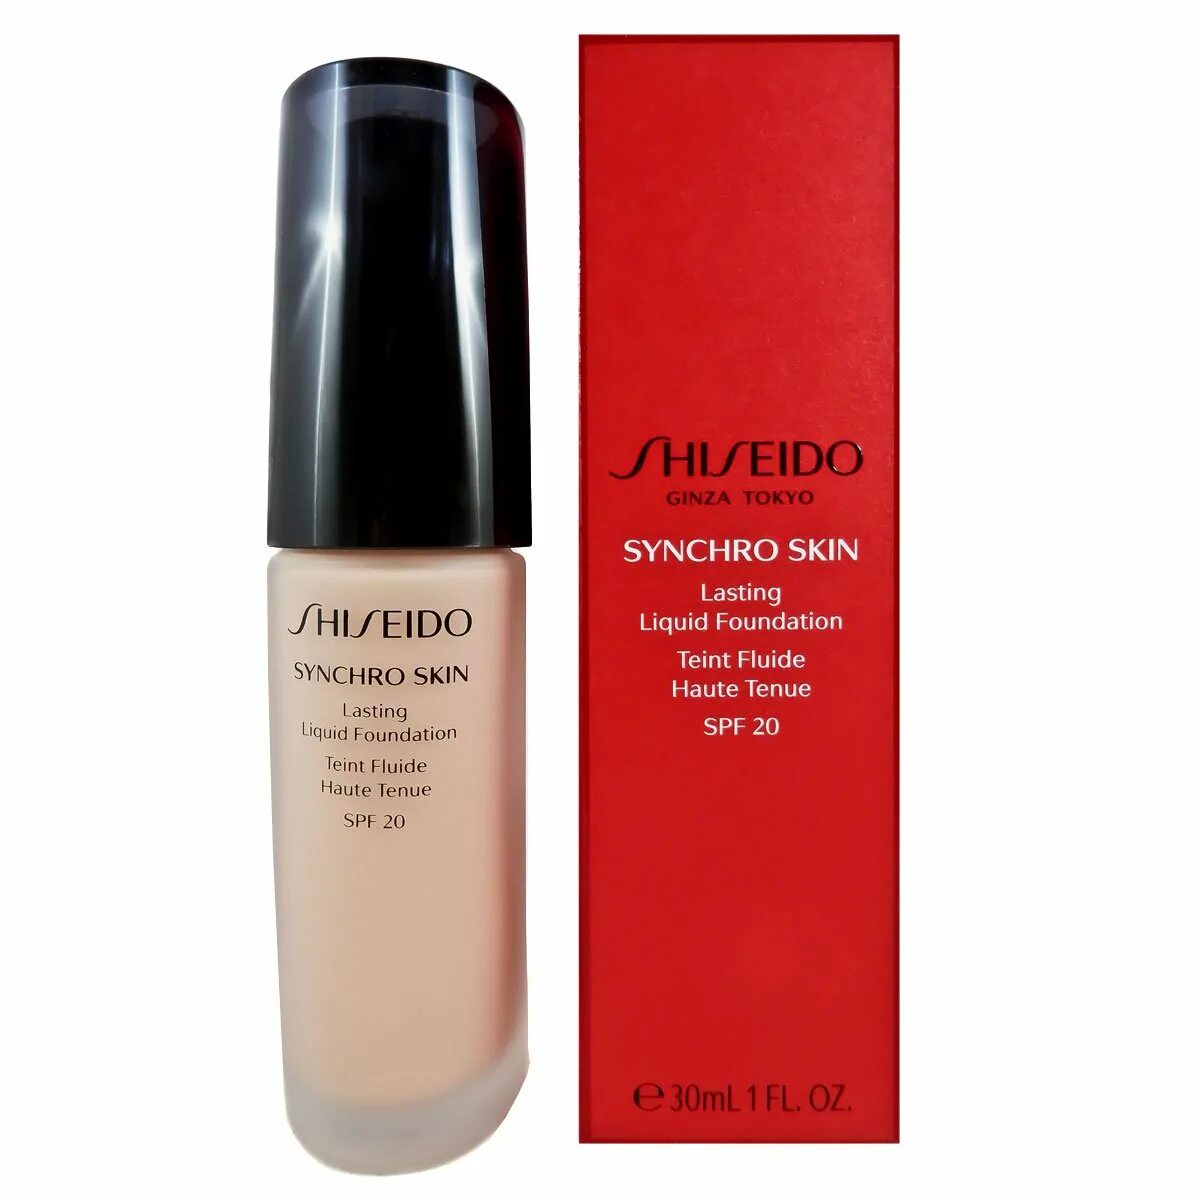 Shiseido Neutral 3 тональный. Тональный шисейдо Synchro Skin. Shiseido lasting Liquid Foundation. Shiseido Synchro Skin lasting Liquid Foundation. Shiseido synchro skin radiant